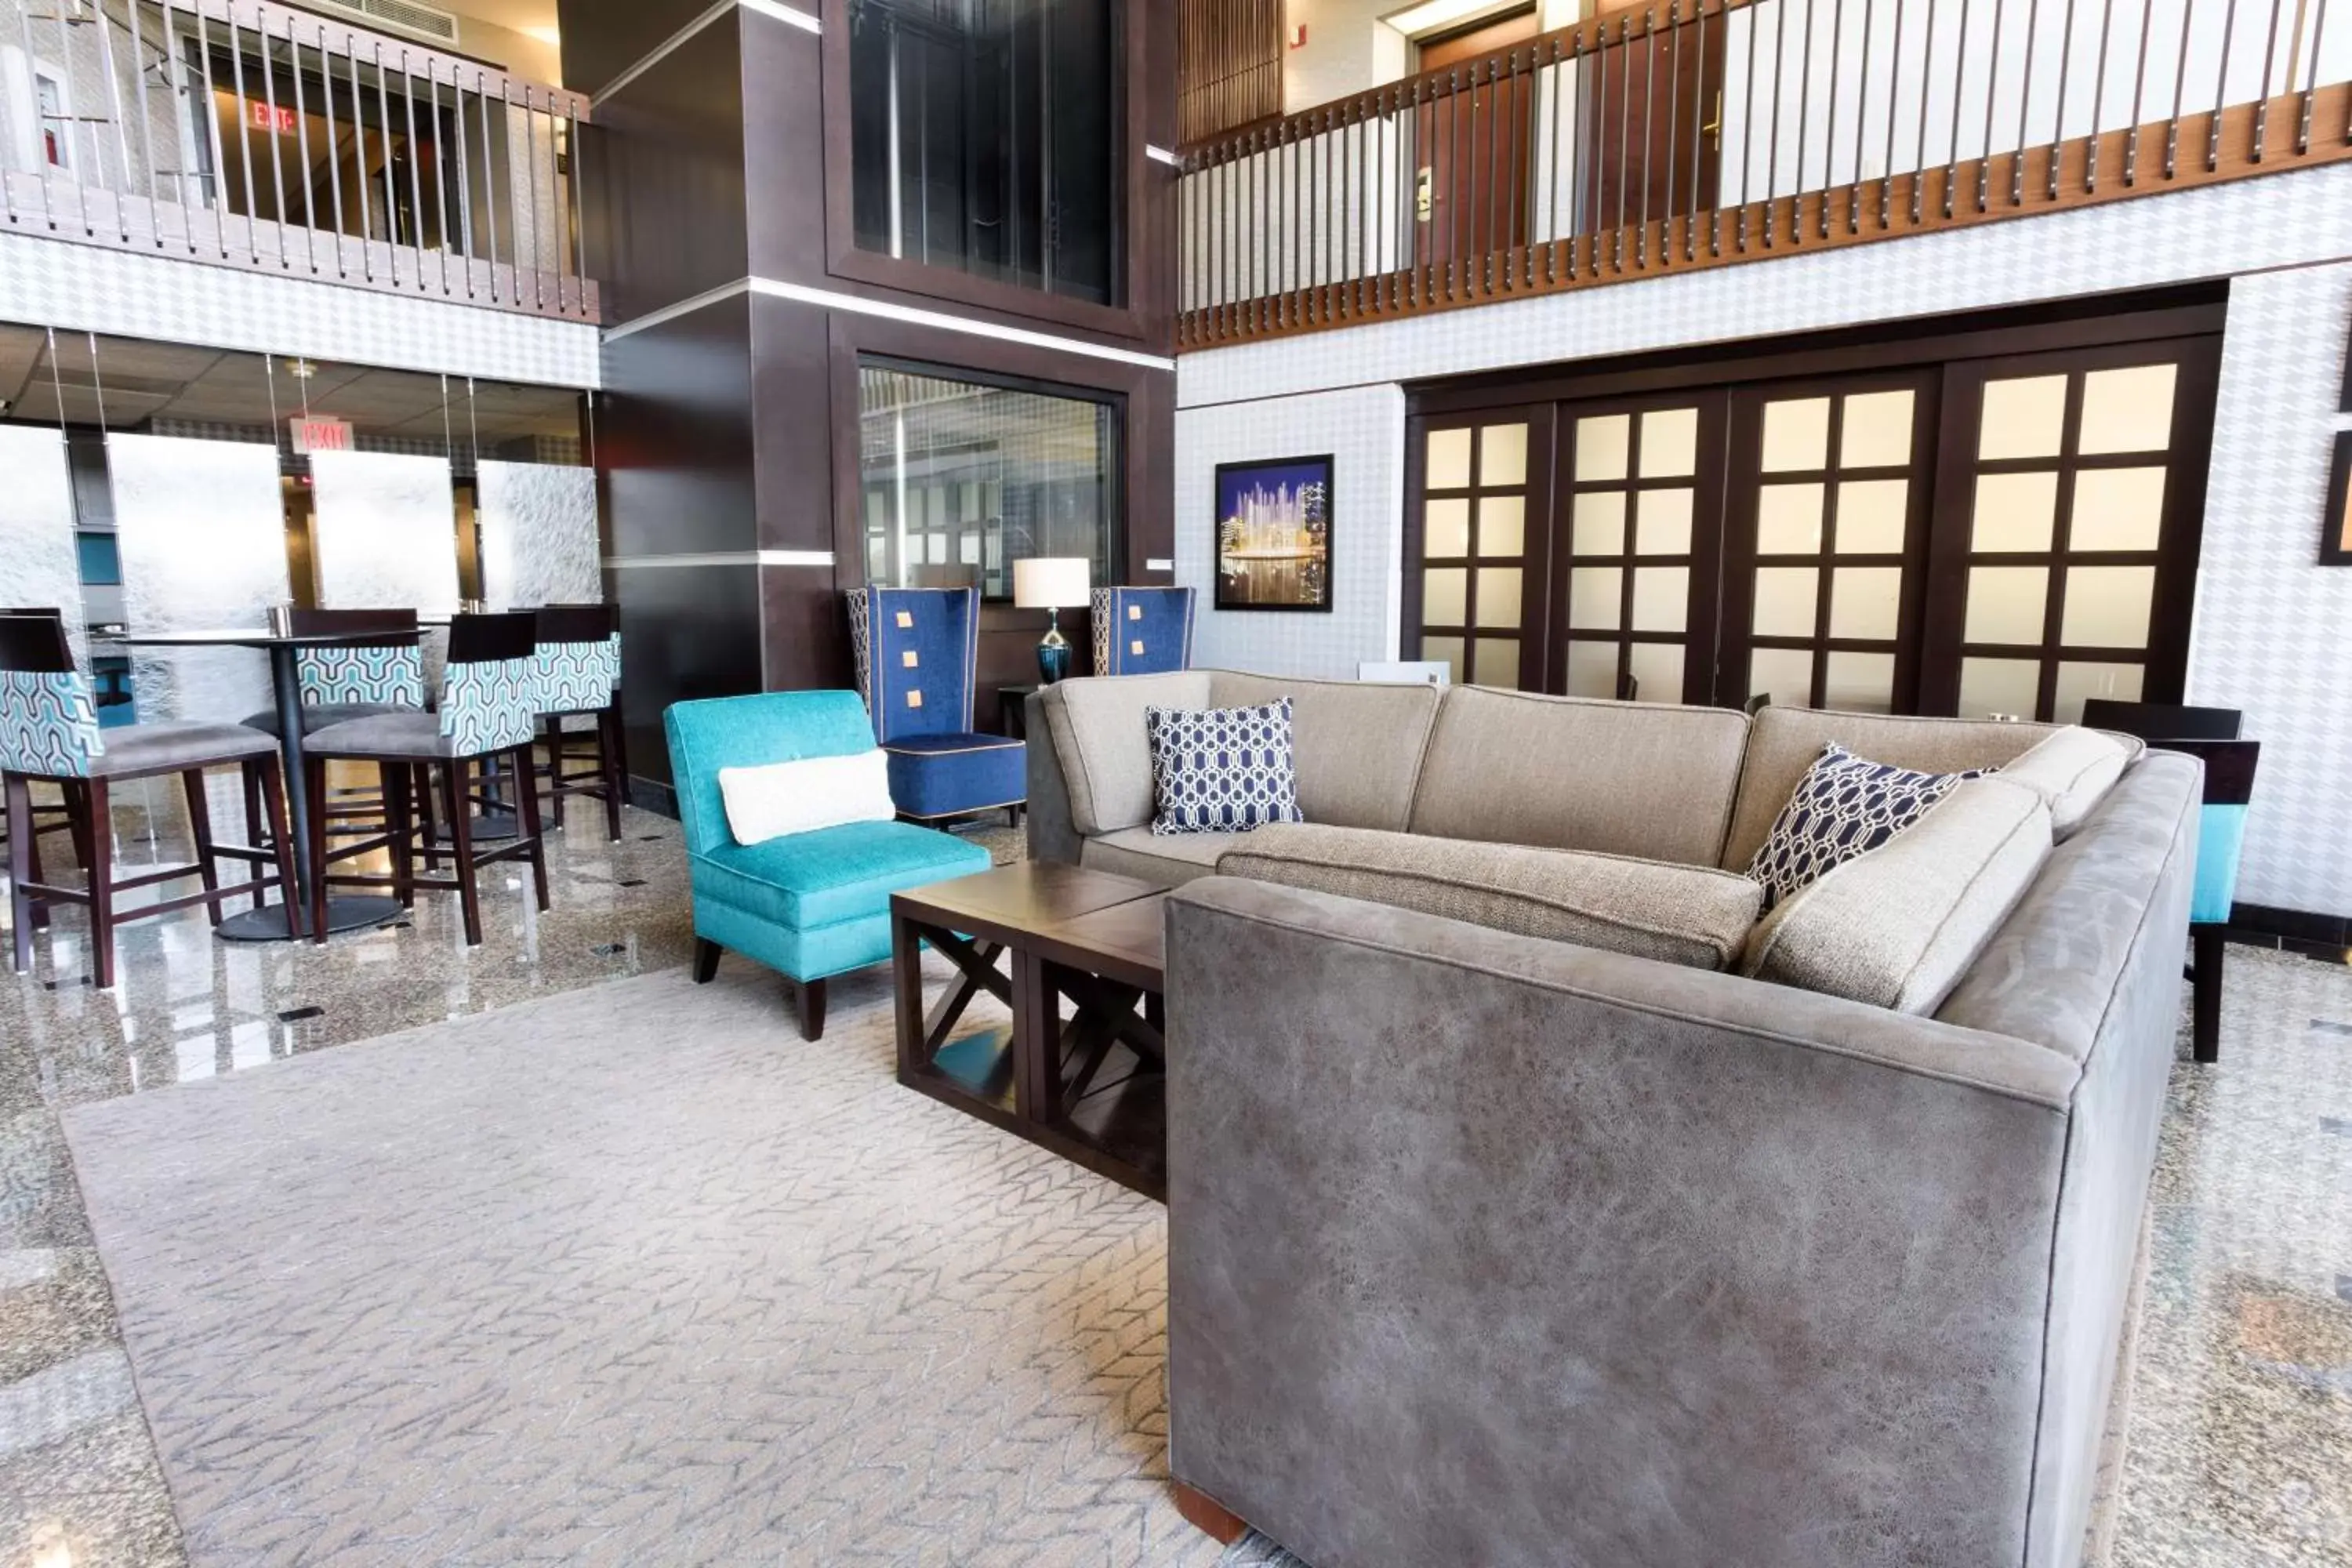 Lobby or reception in Drury Inn & Suites Kansas City Airport